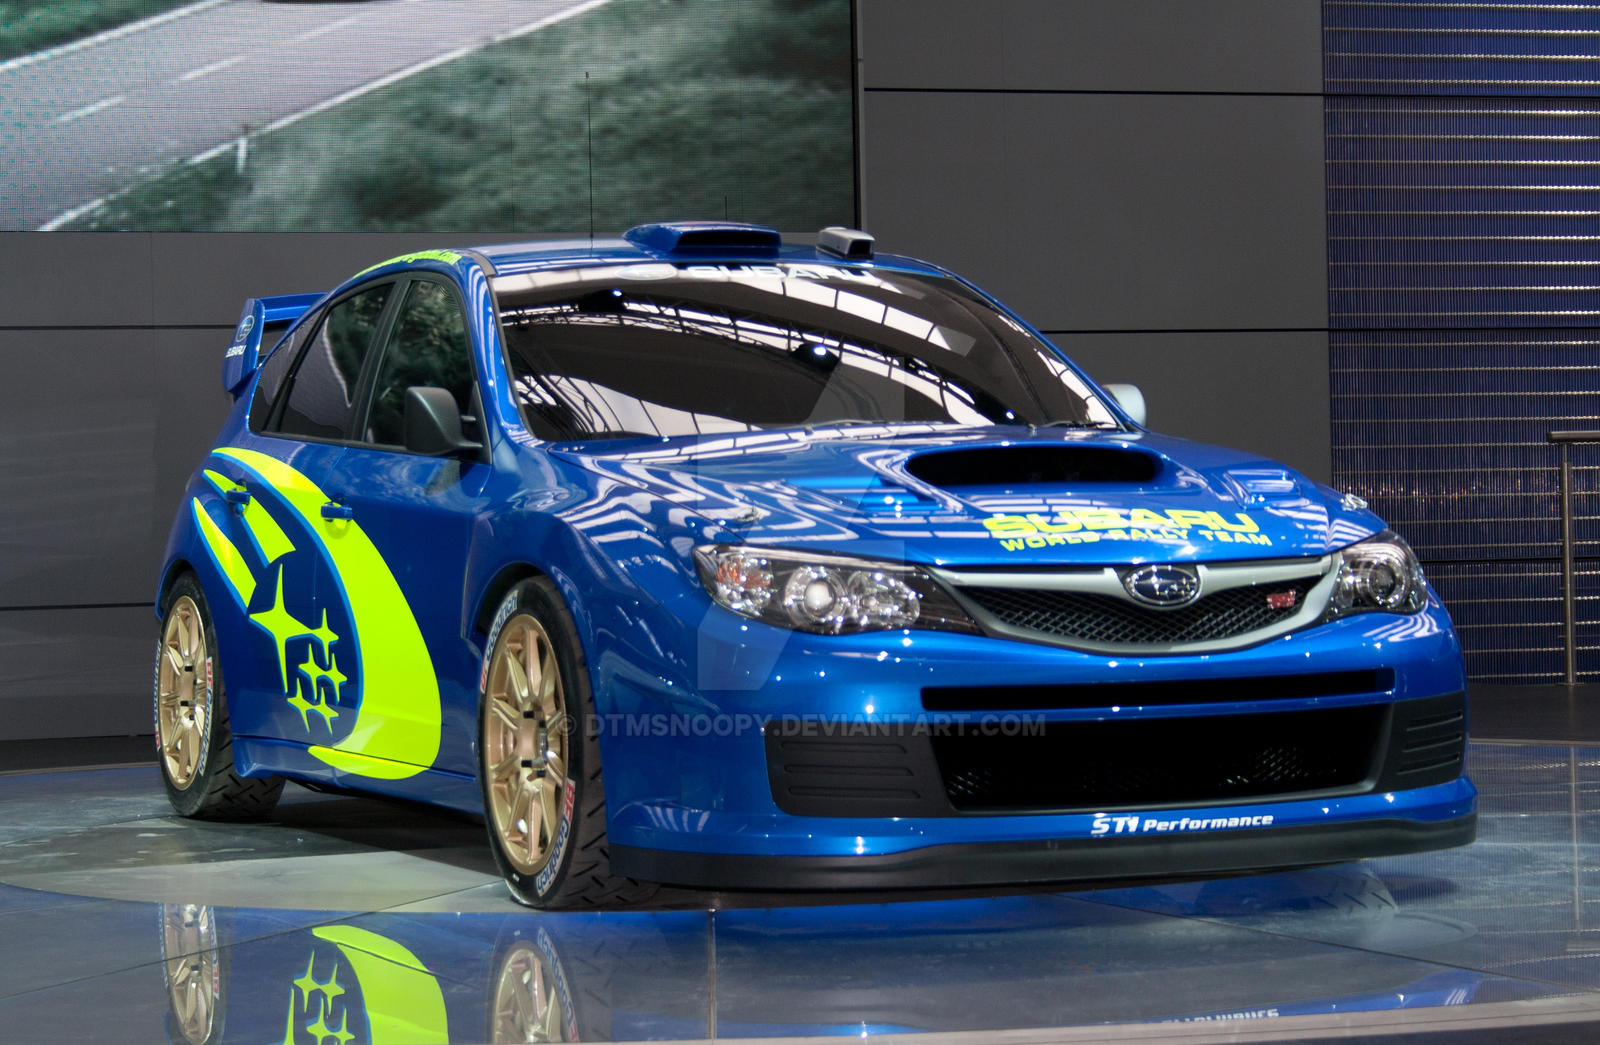 2008 Subaru Impreza WRC by dtmsnoopy on DeviantArt